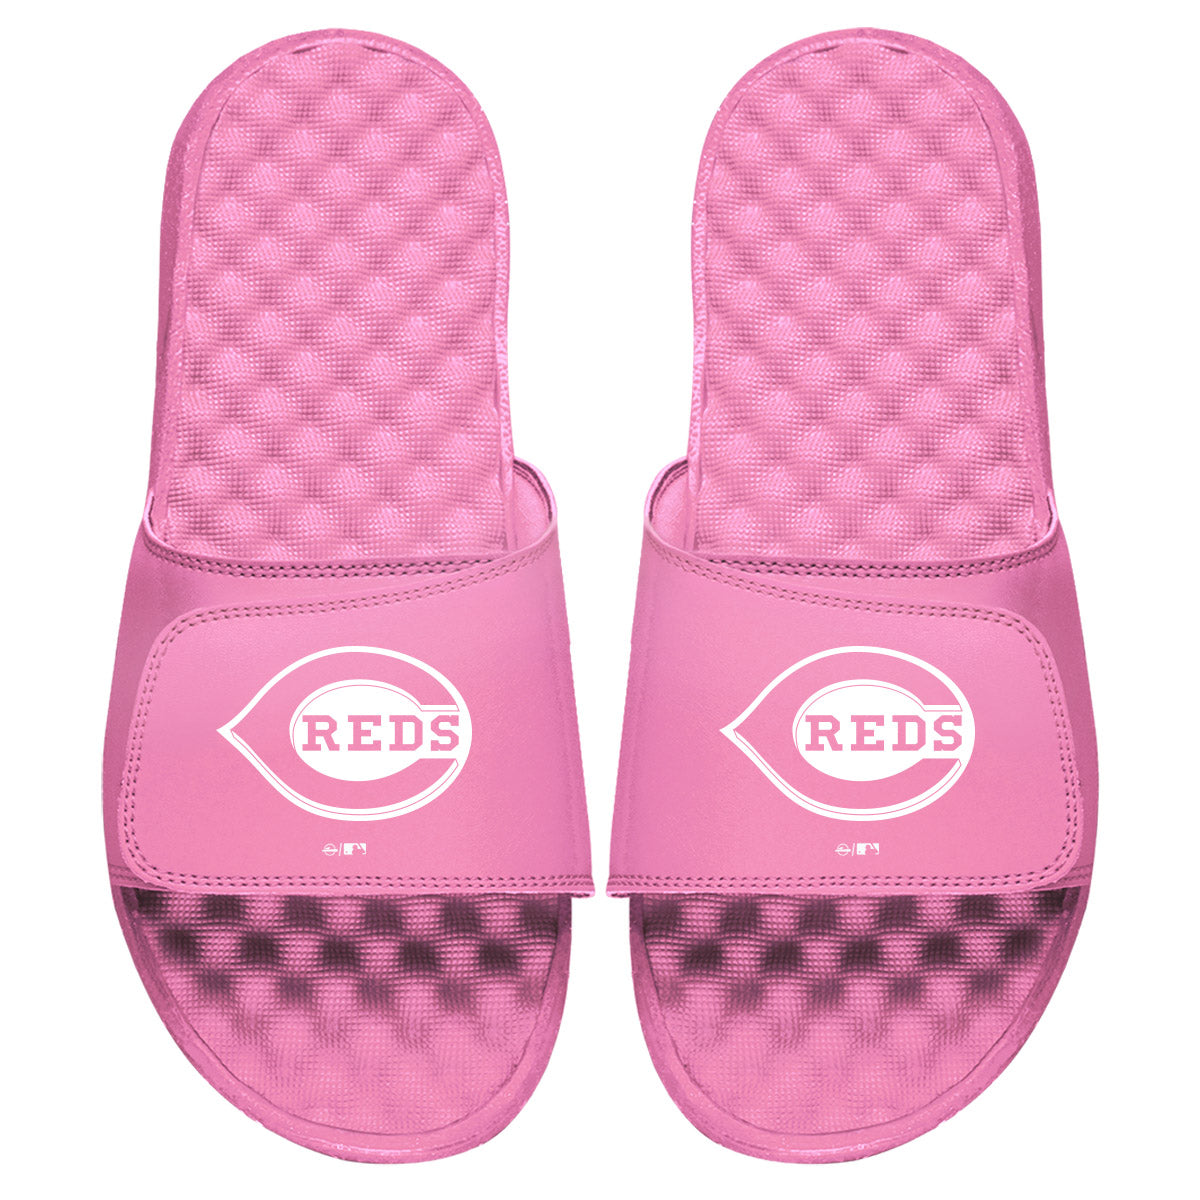 Cincinnati Reds Primary Pink Slides